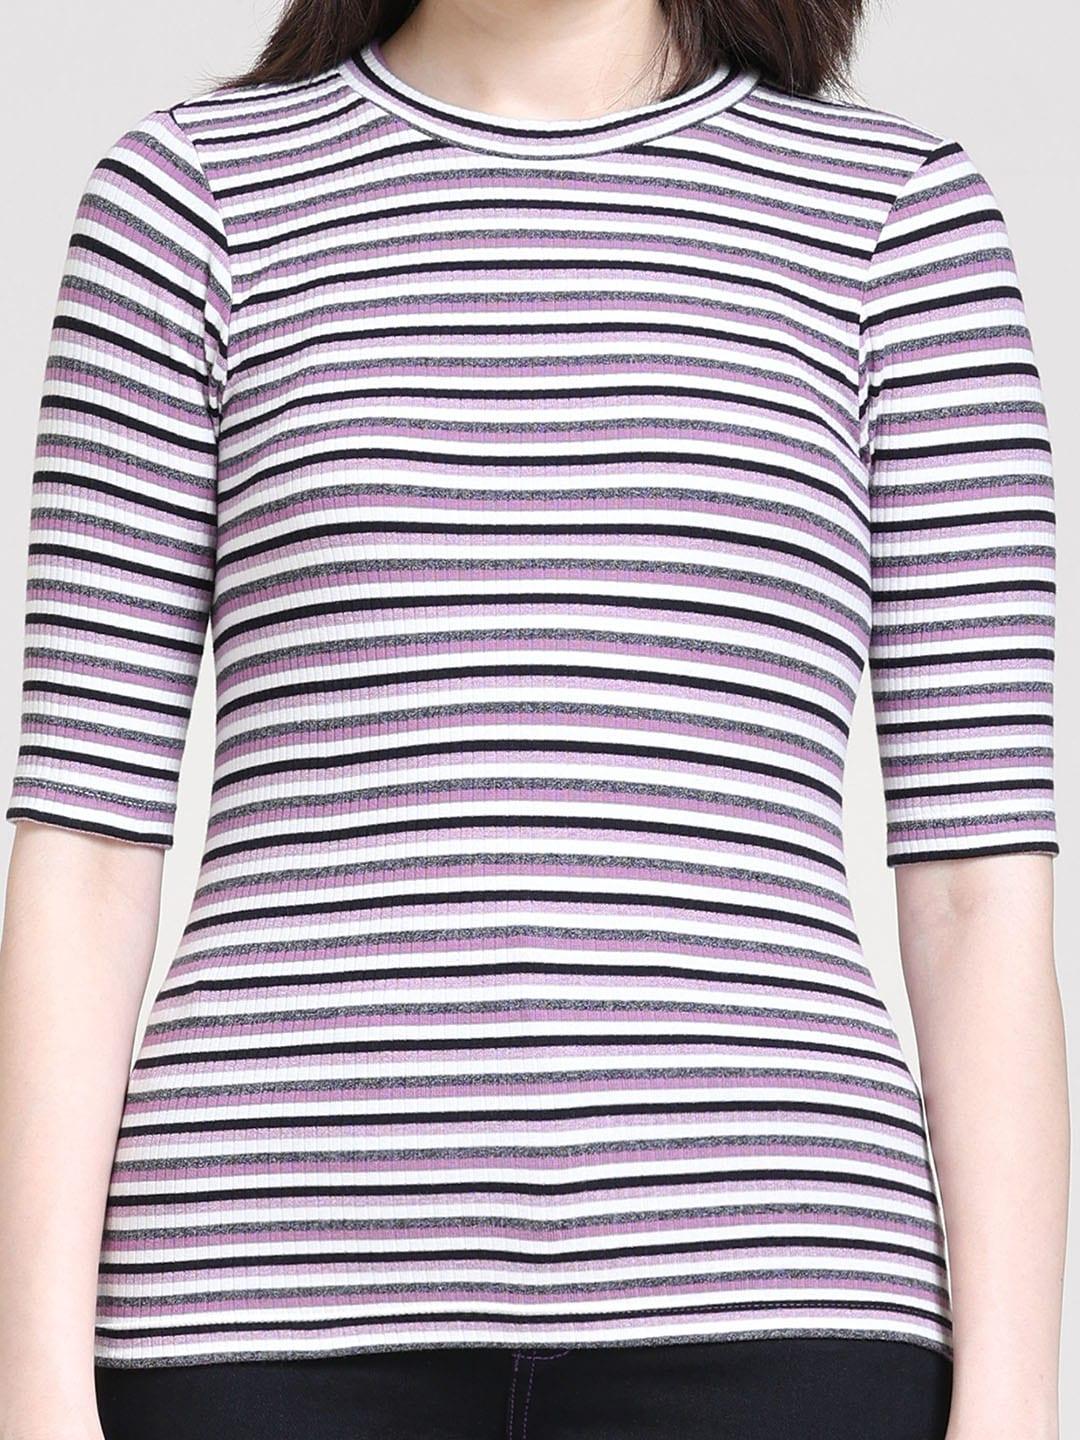 gloria vanderbilt striped pockets slim fit cotton t-shirt